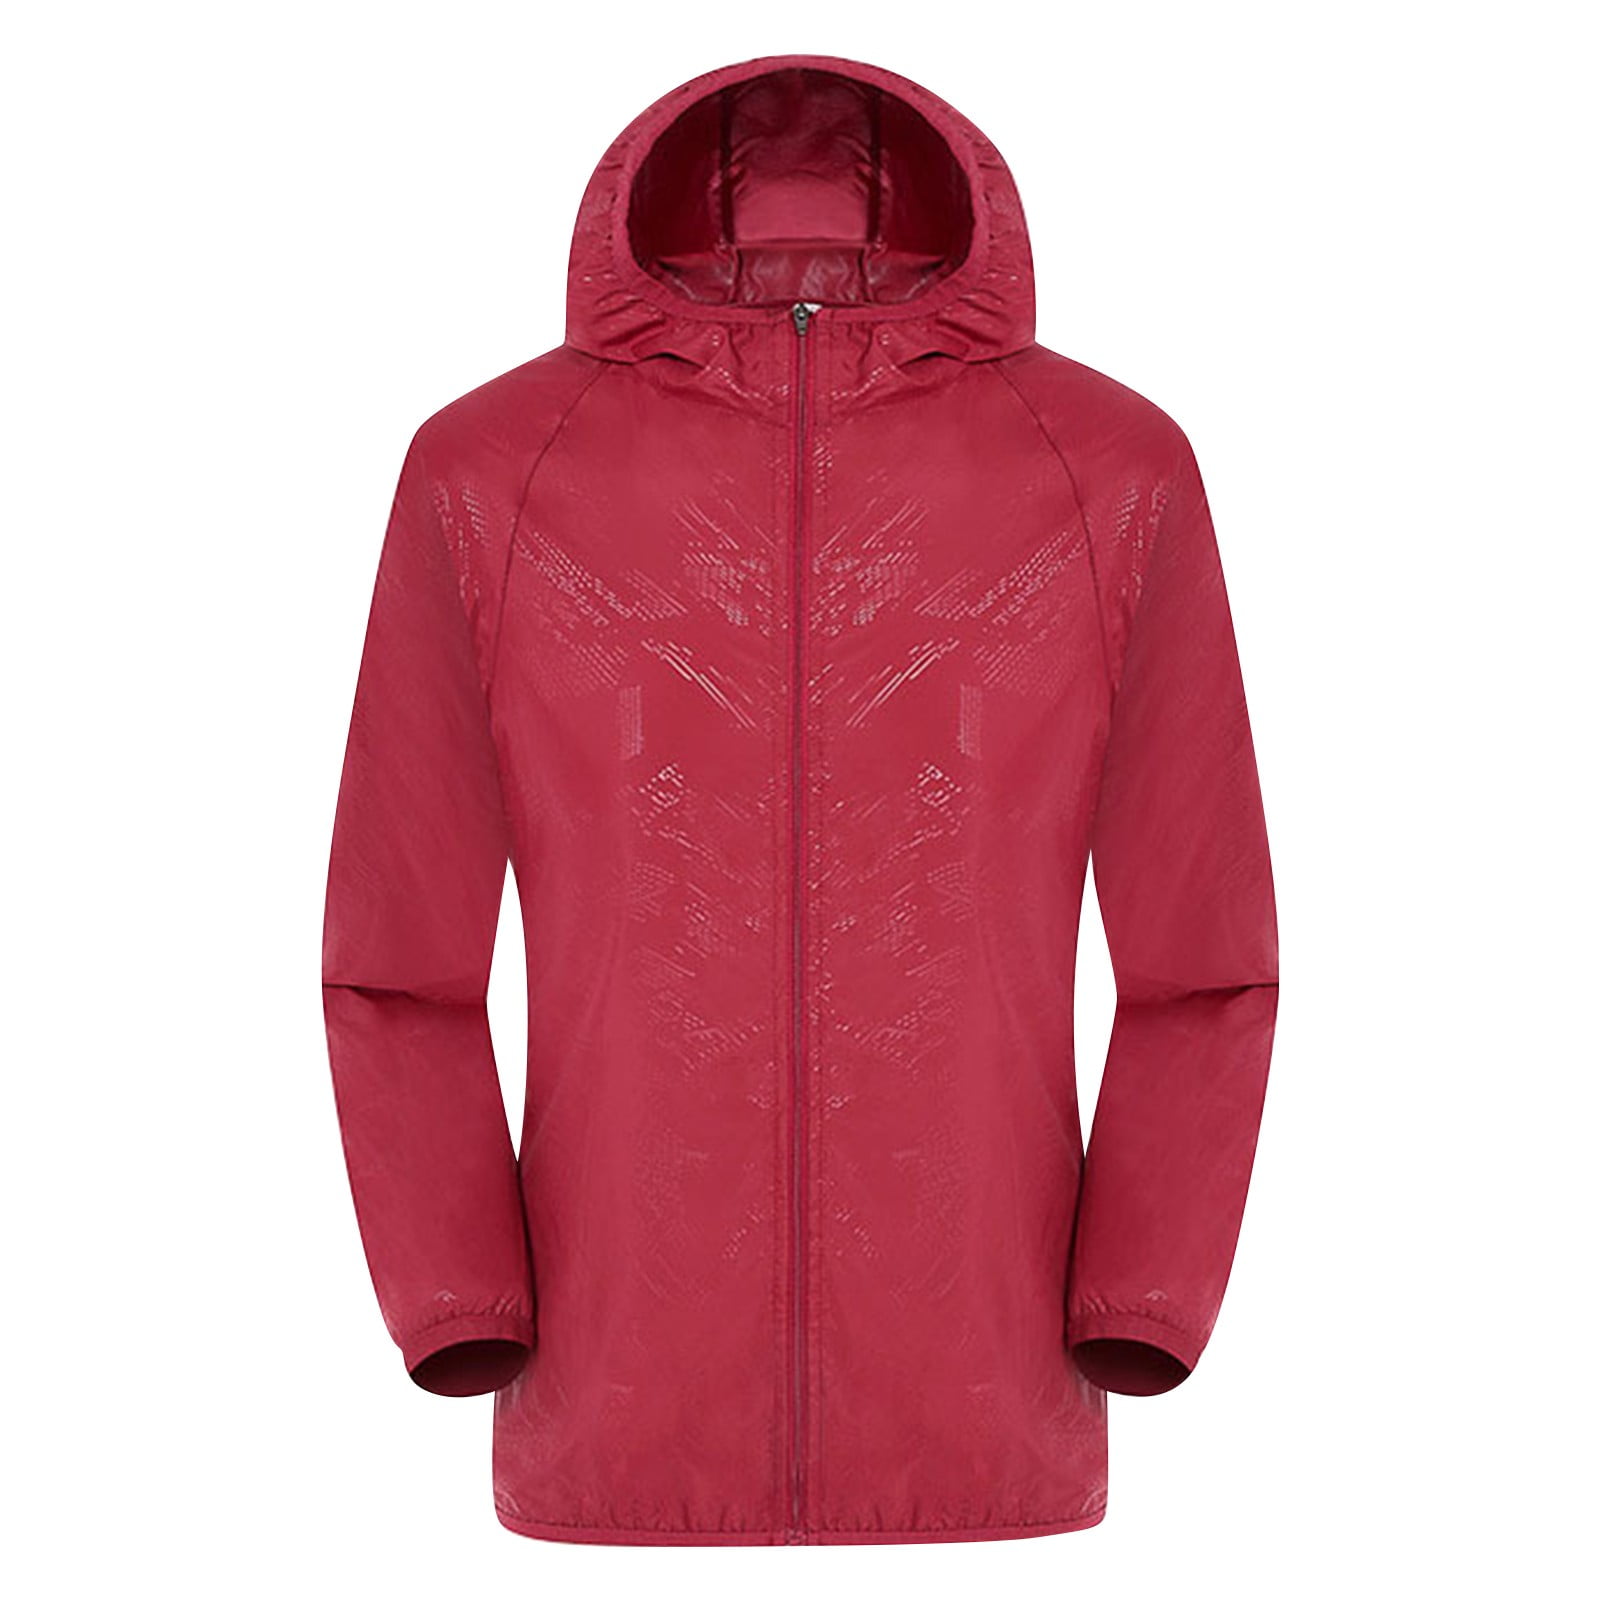 Lisingtool Winter Coats for Women Solid Rain Jacket Outdoor Plus Size ...